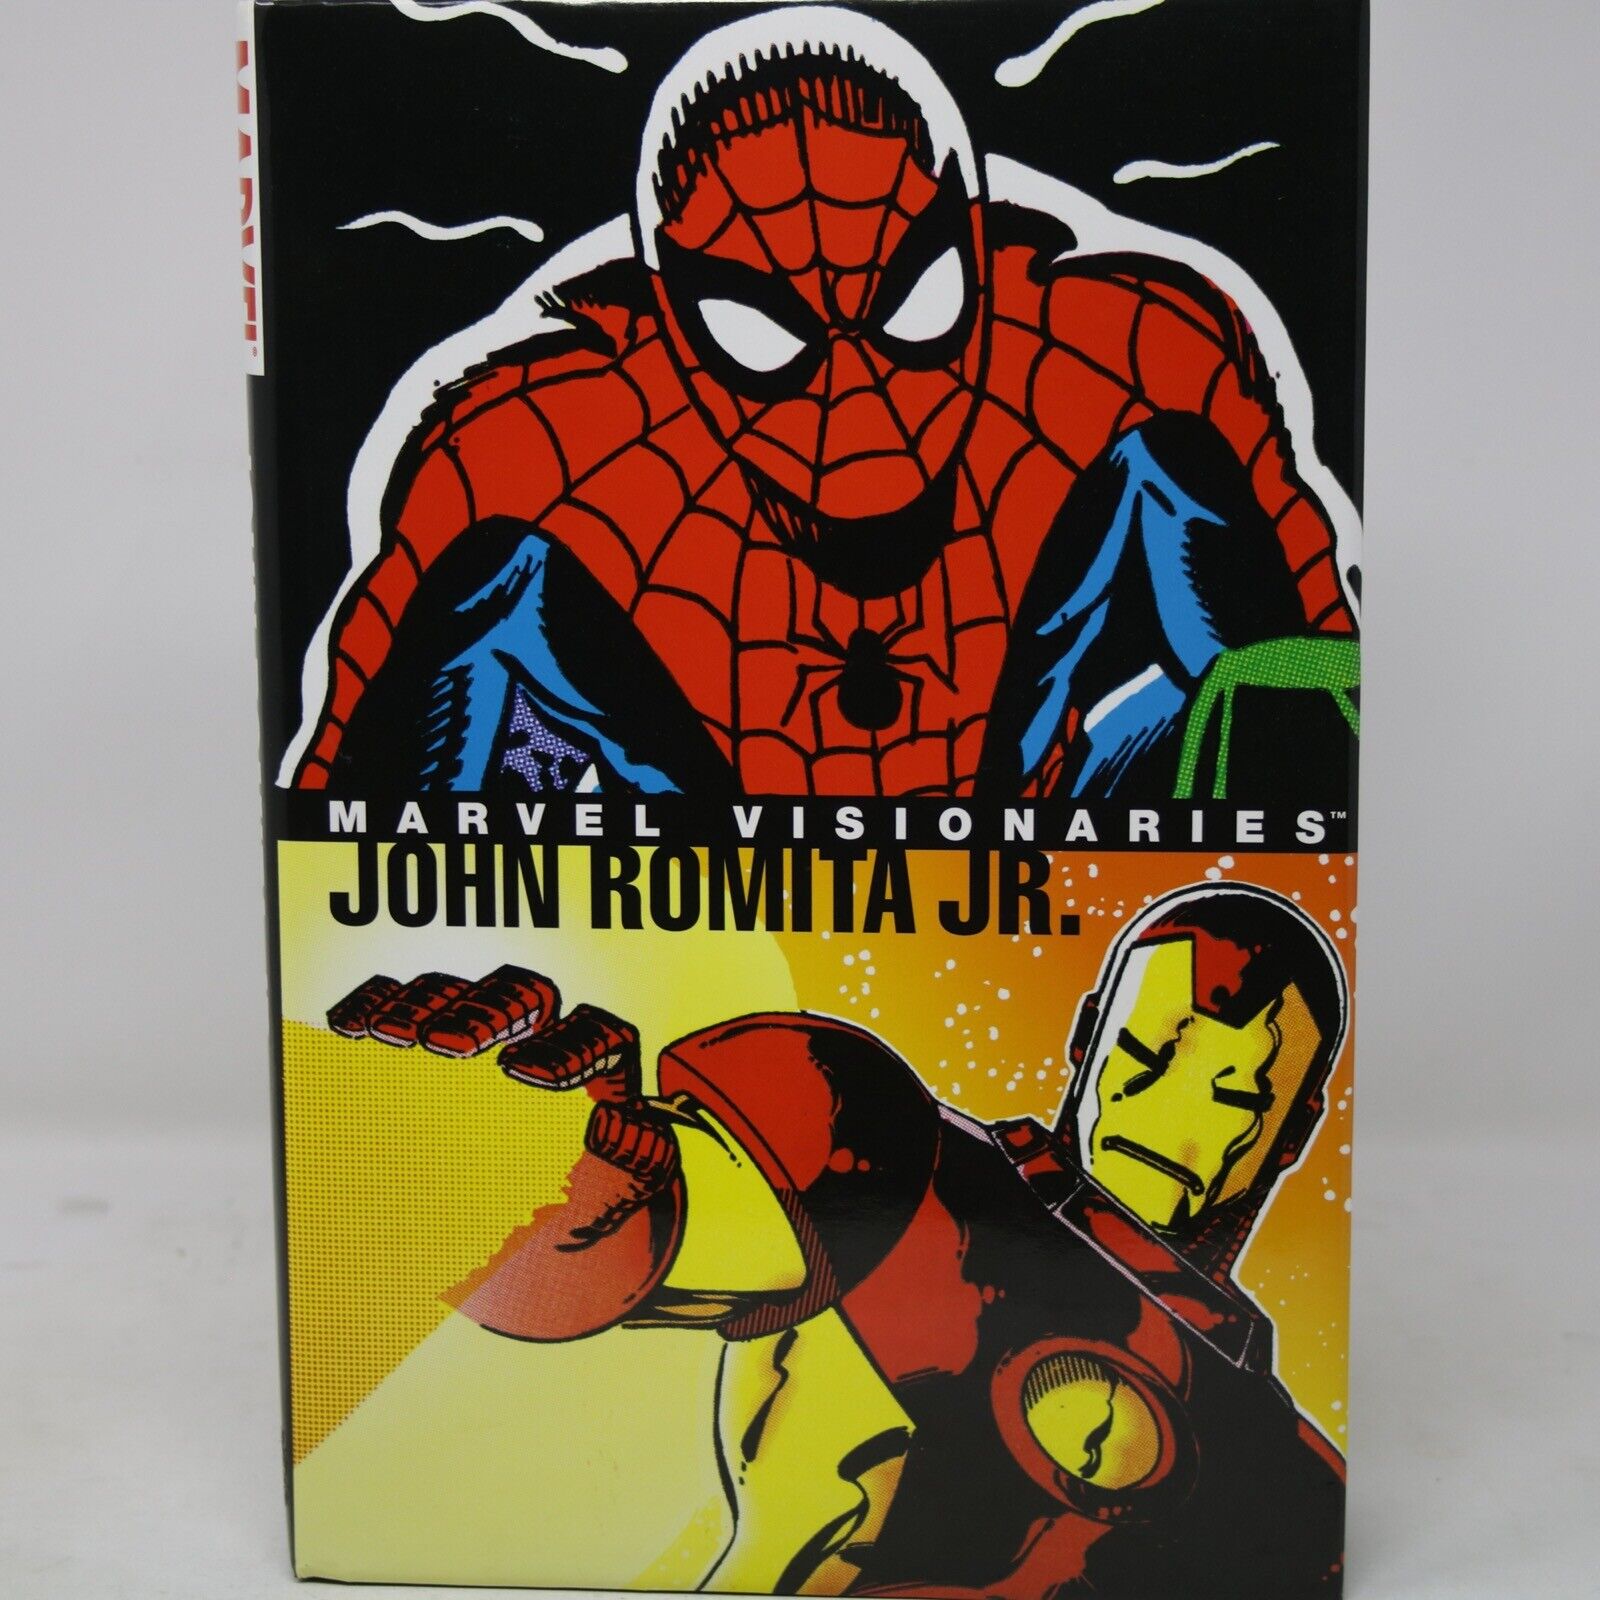 Marvel Visionaries Ser.: John Romita Jr. by Frank Miller, John Romita and J. Mic